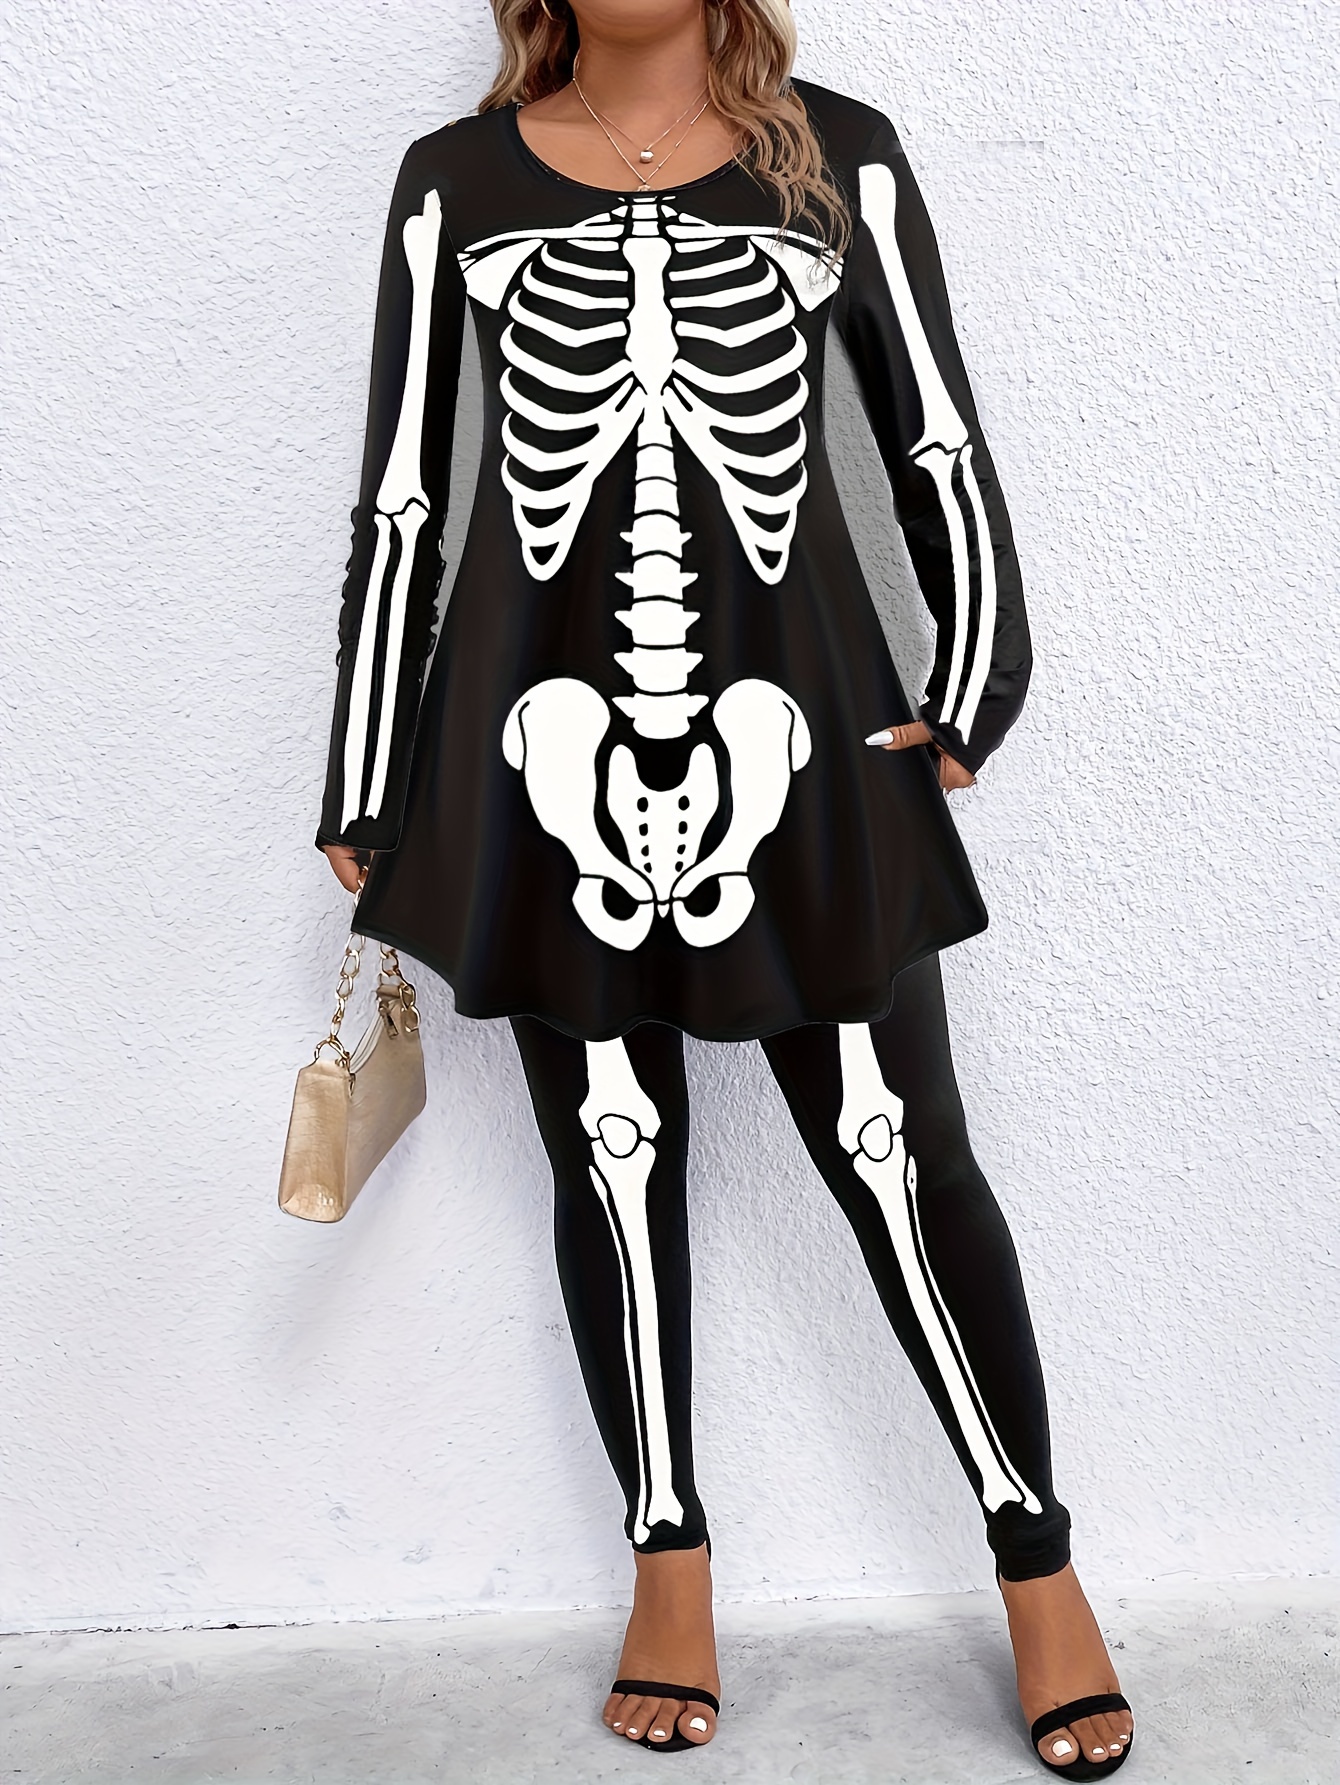 Skeleton Bodysuit Plus Size Costume: Women's Halloween Outfits